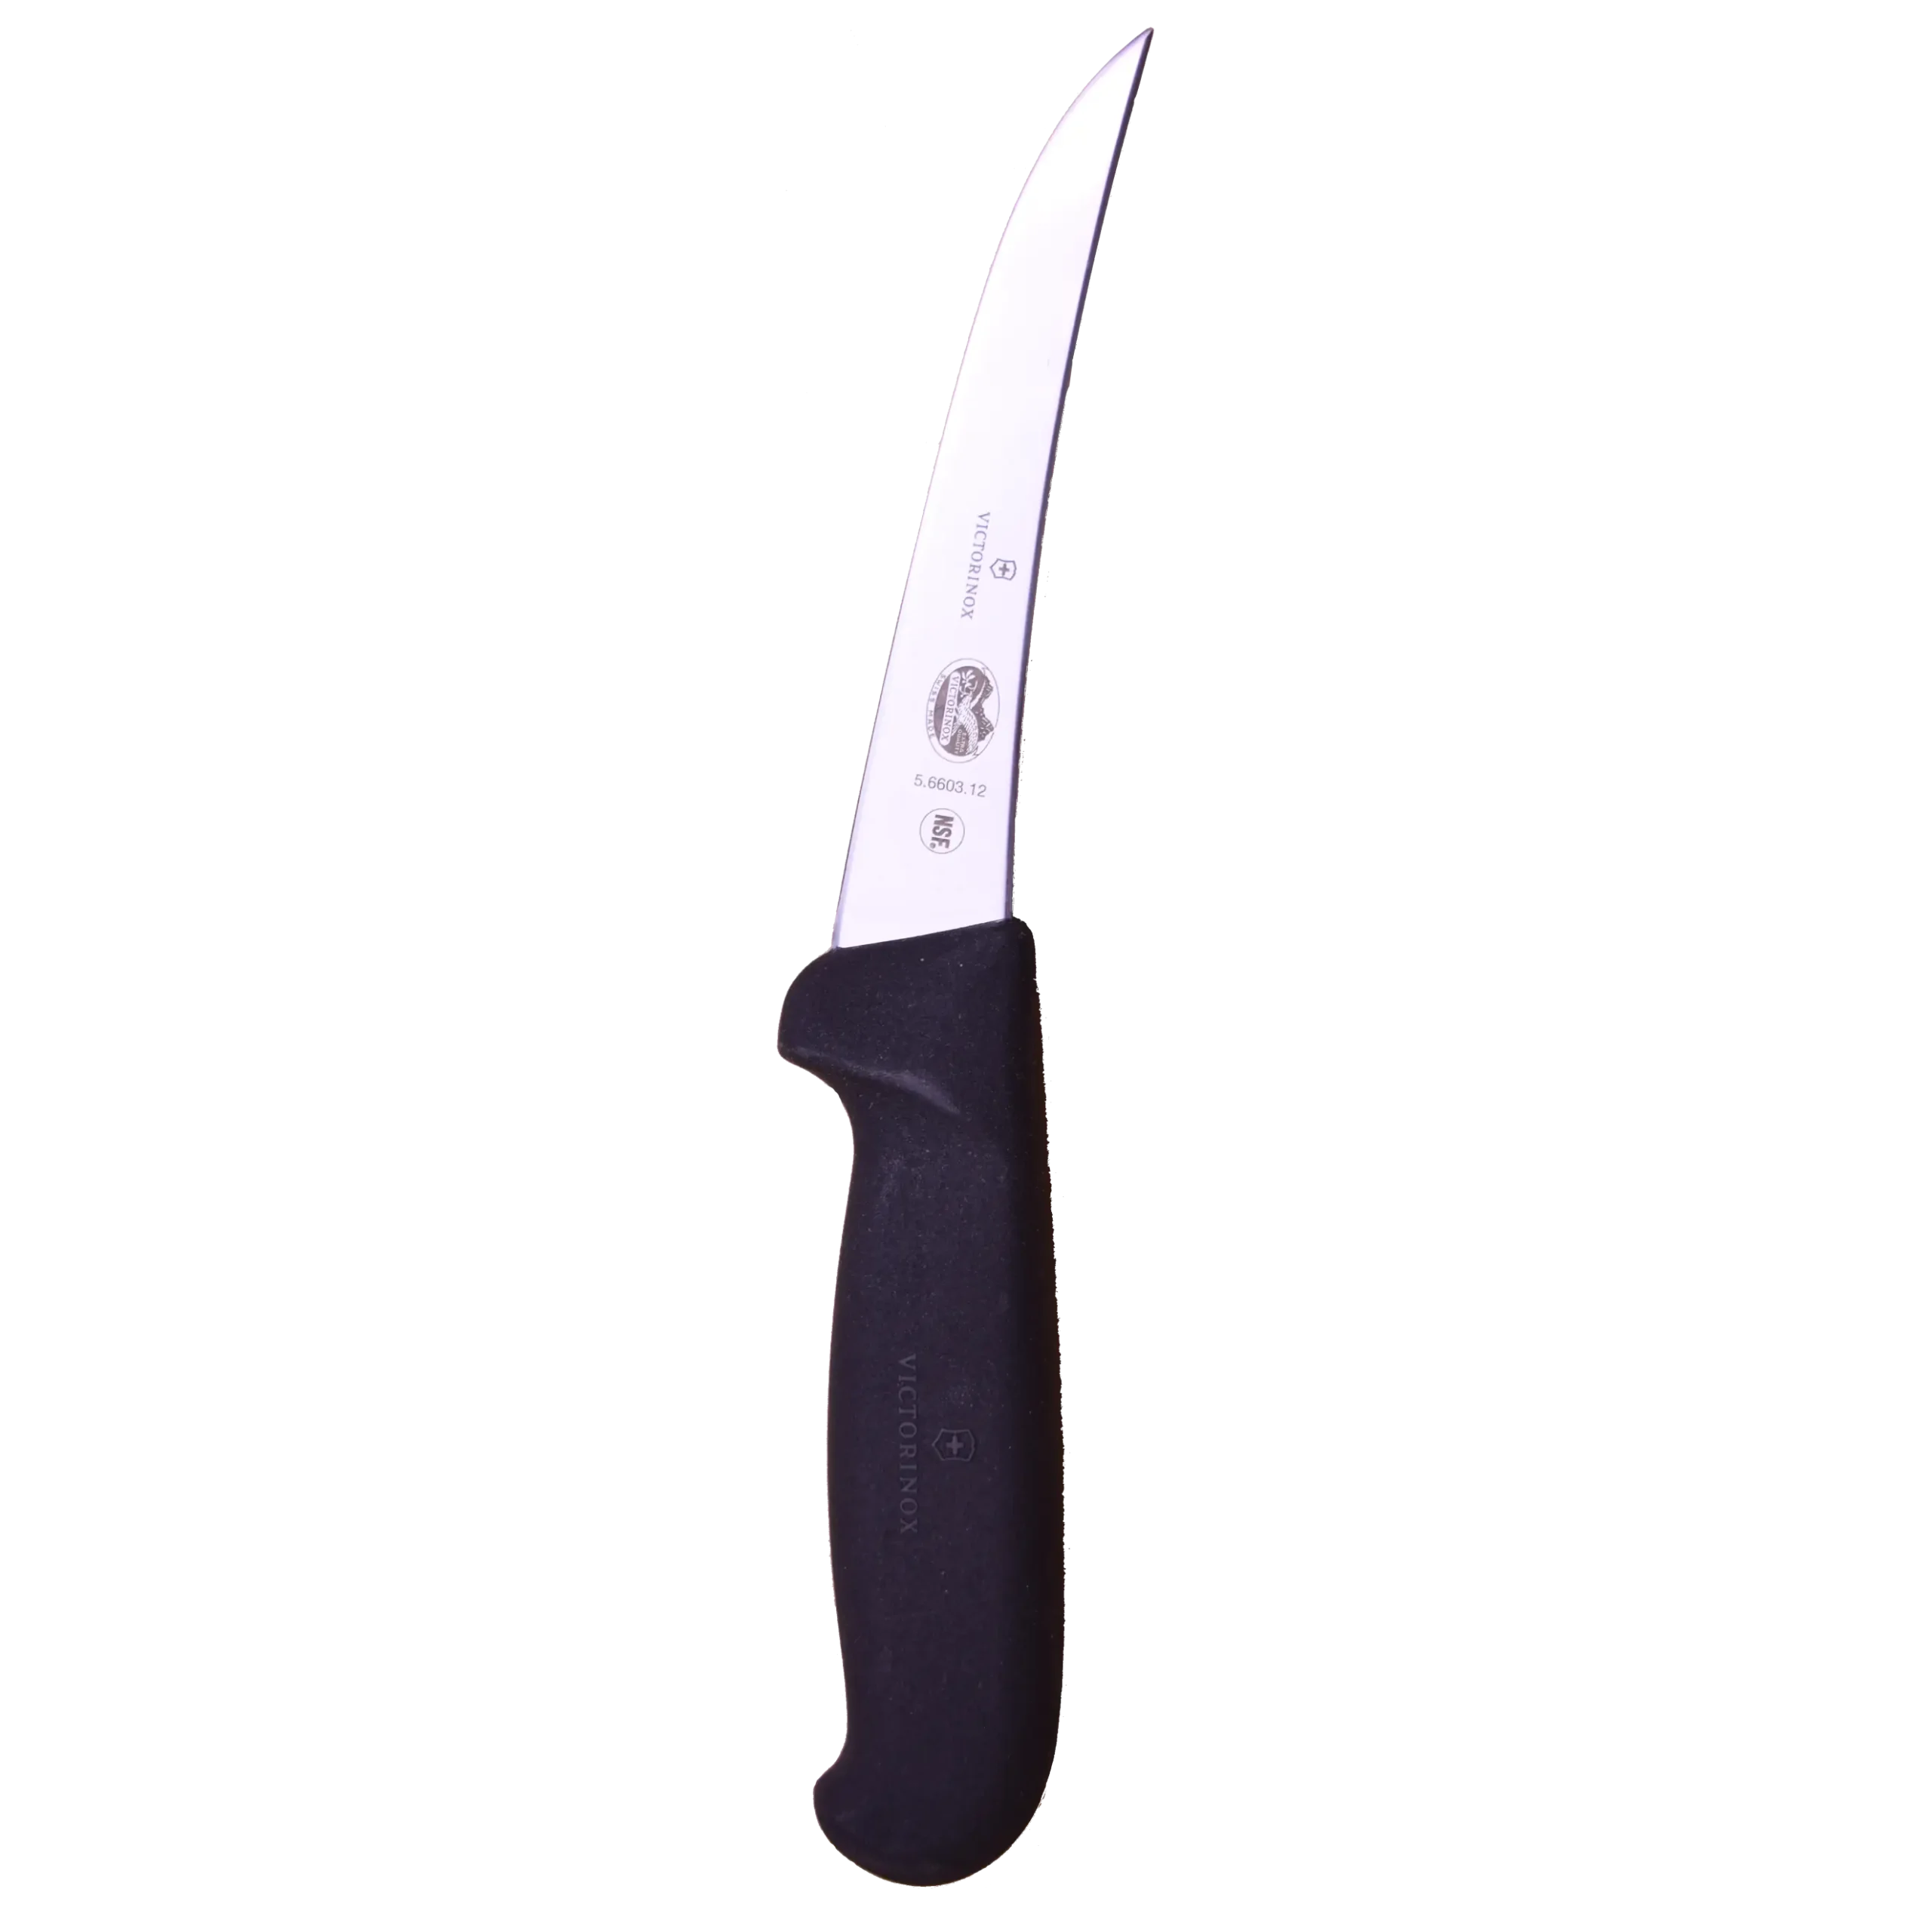 Victorinox Boning Knife with Semi Stiff, Curved, 5, Black